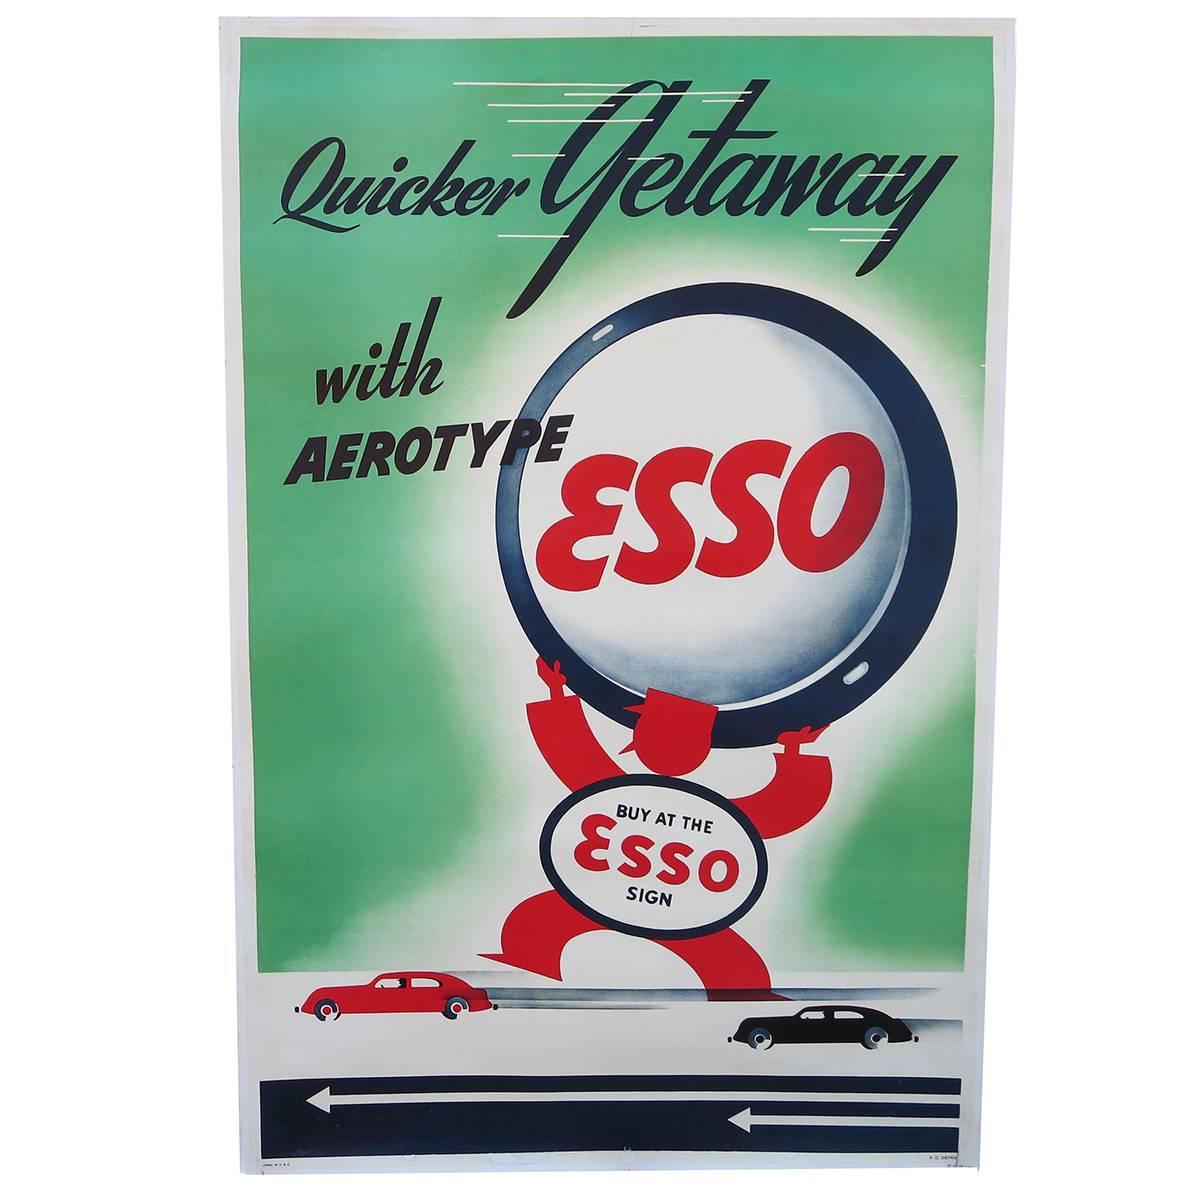 Art Deco Esso Gasoline 1930s Advertising Poster